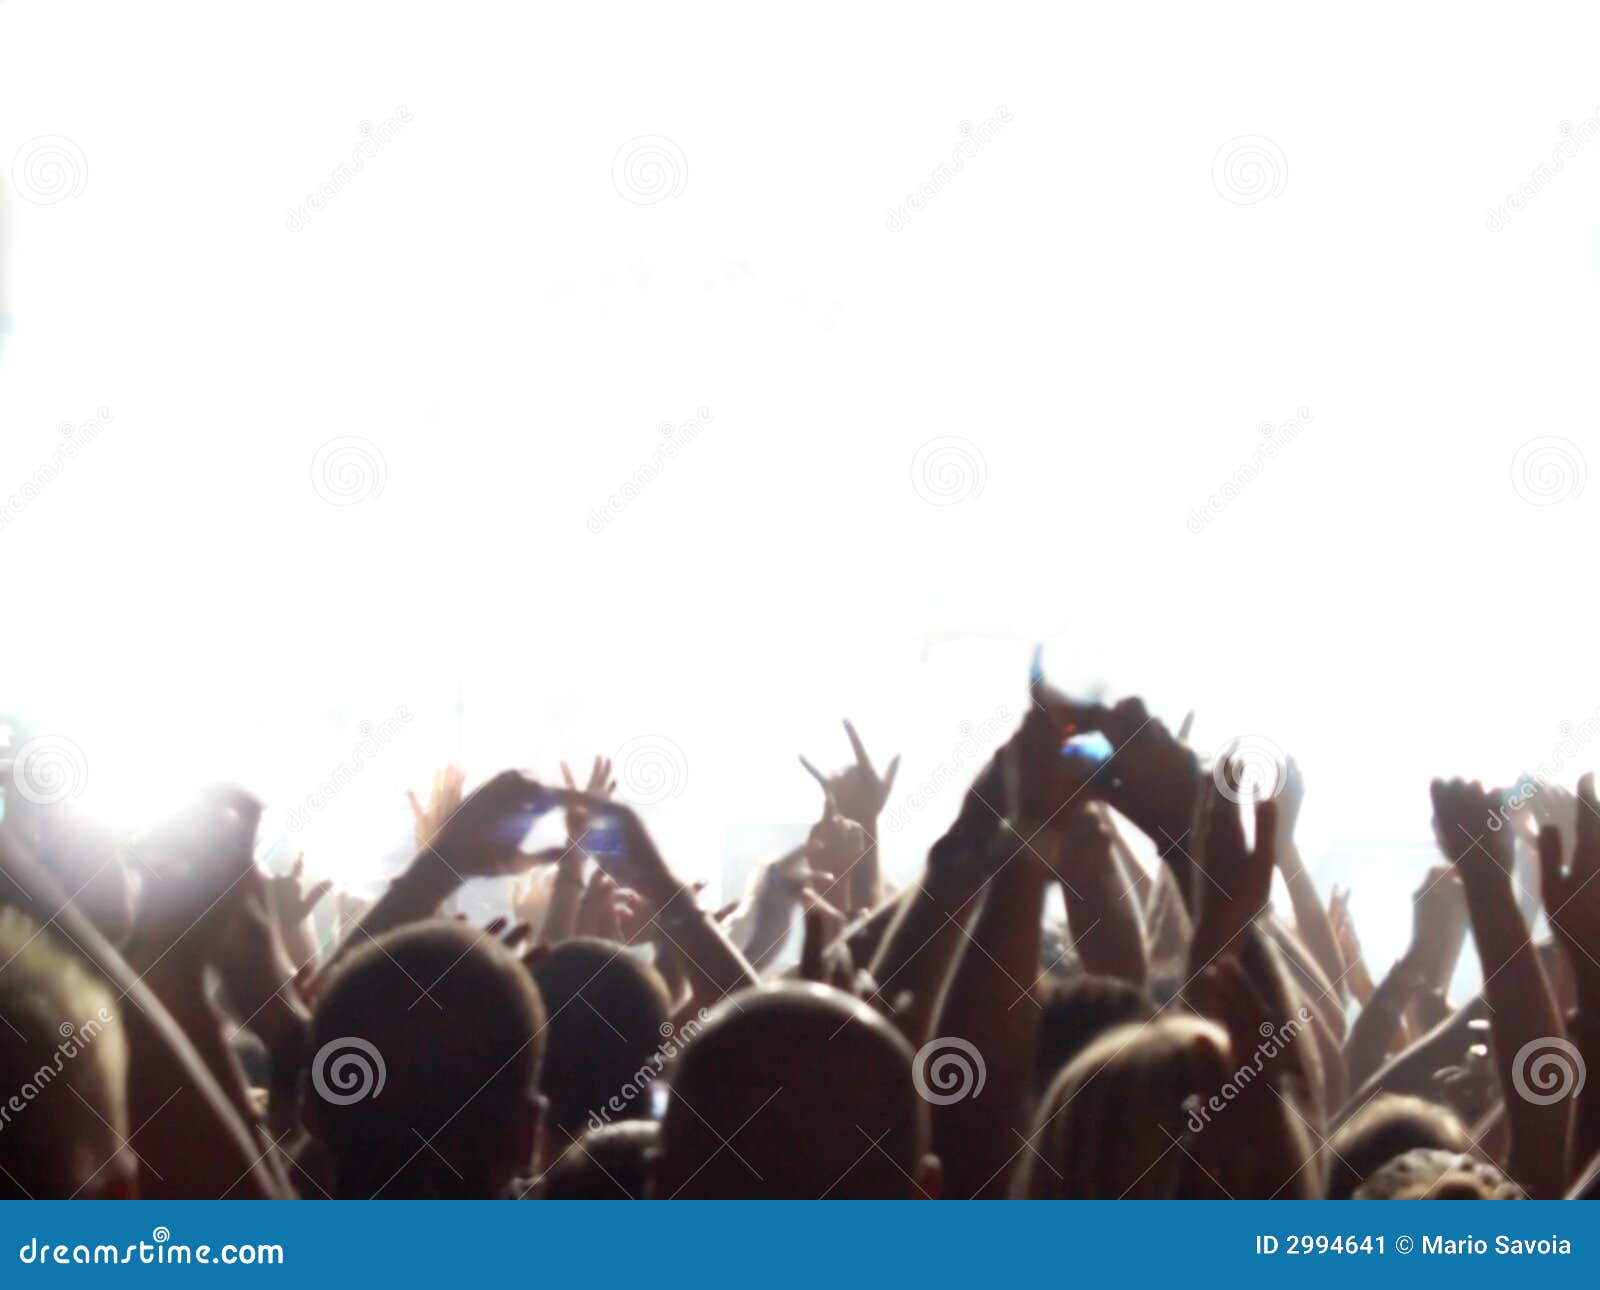 rock concert audience